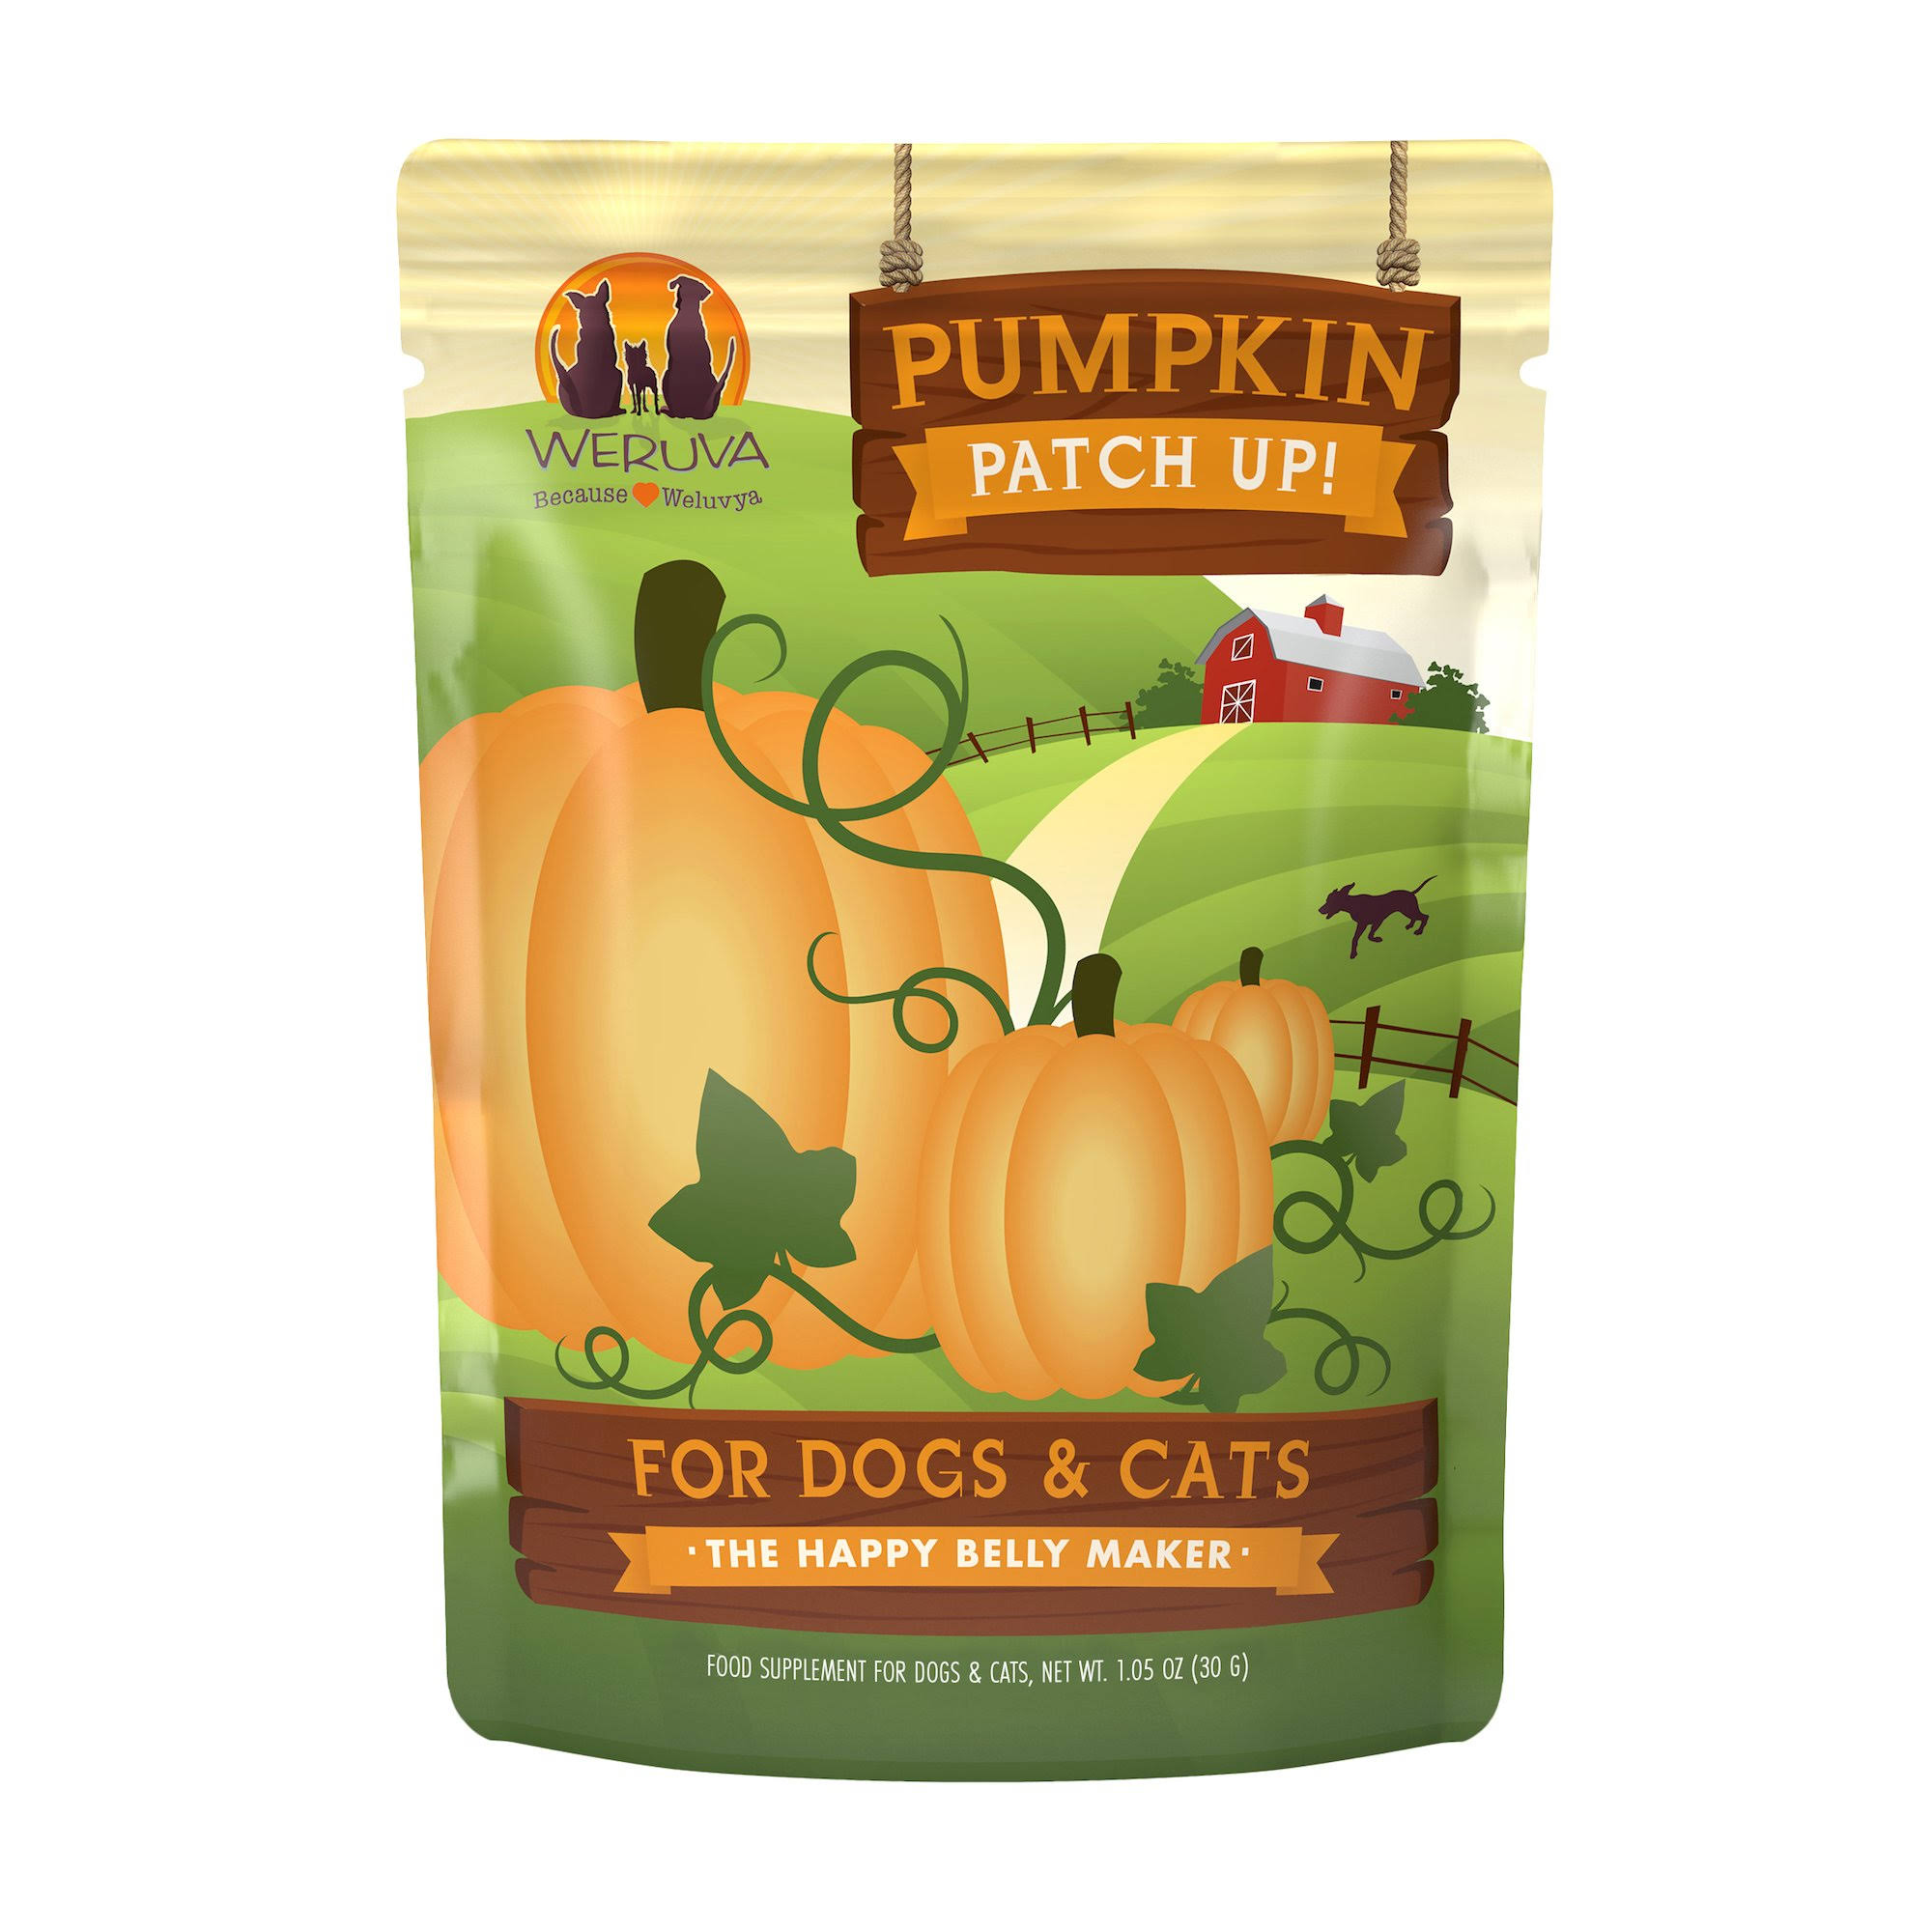 Weruva Adult Dog & Cat Food - Pumpkin, 30g